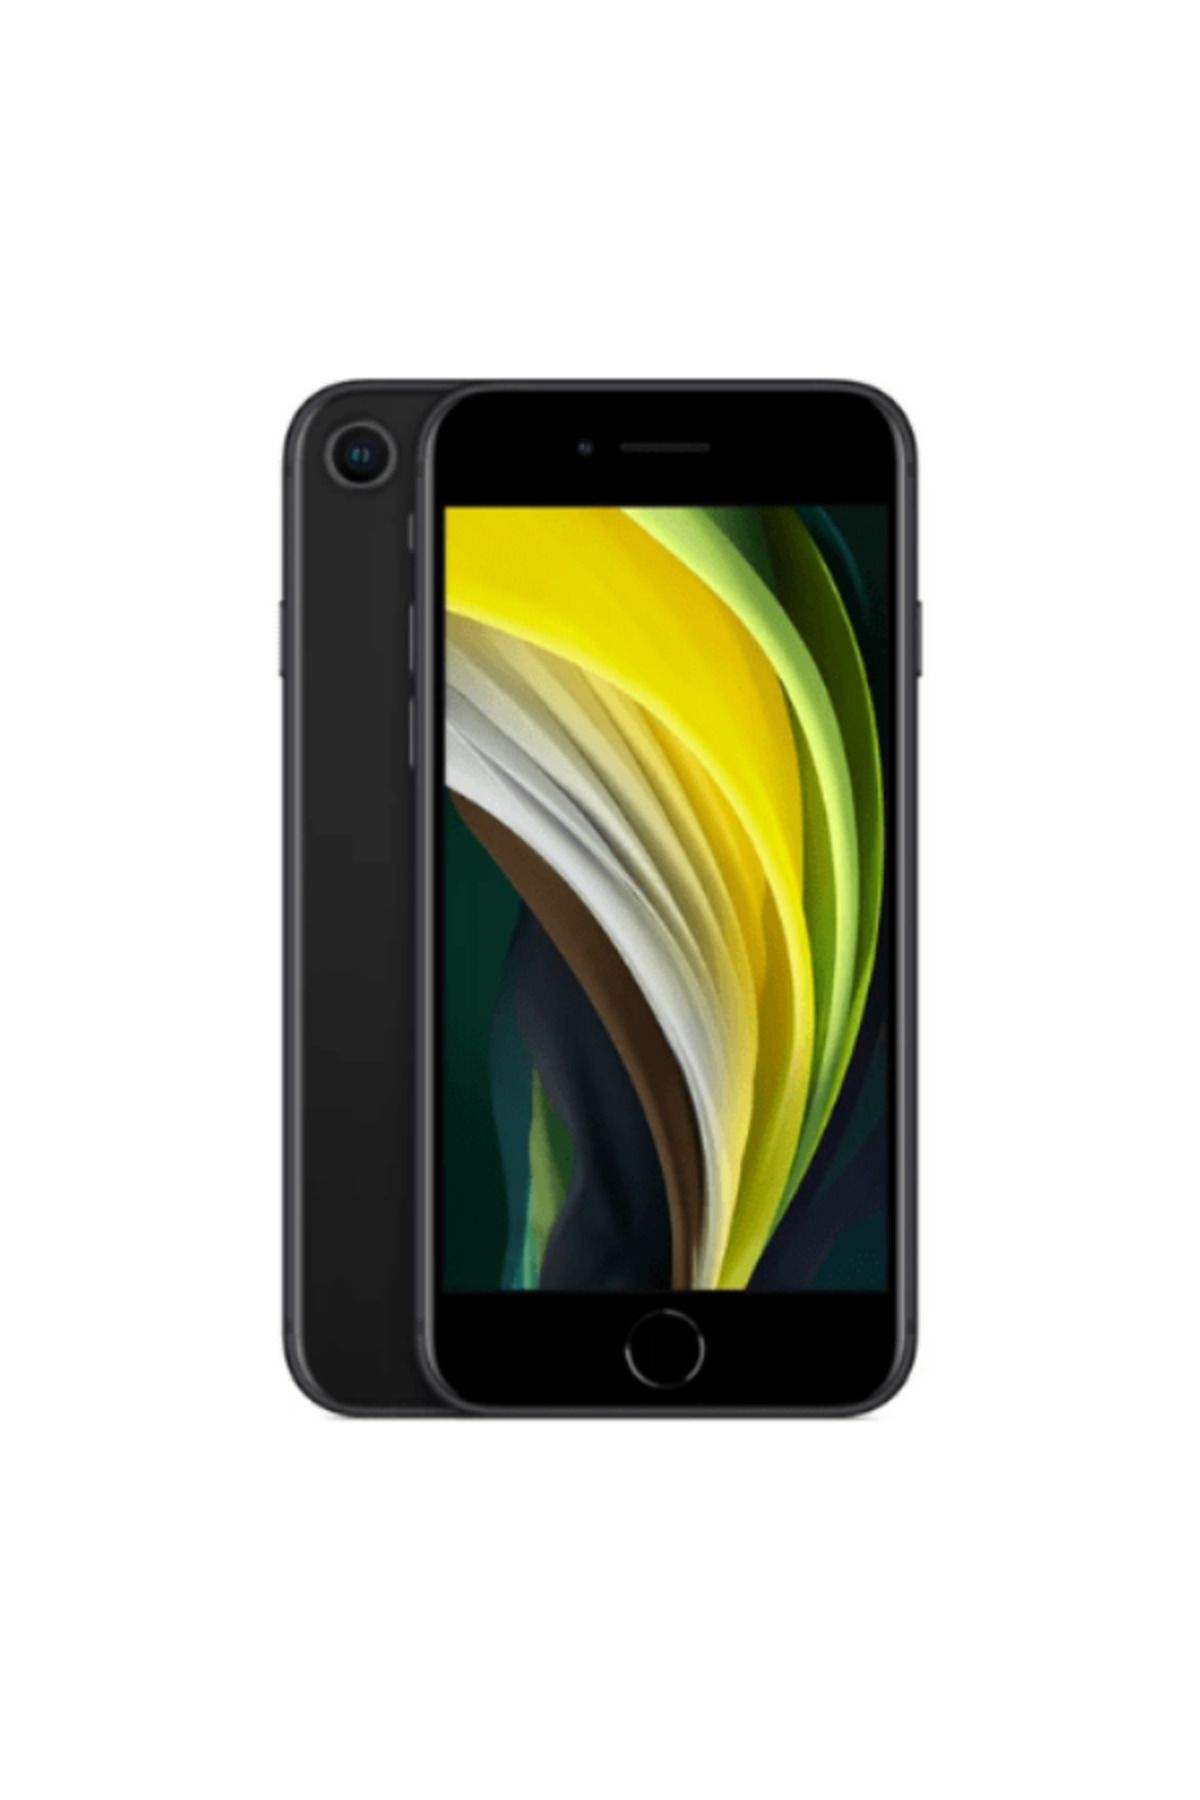 Apple Yenilenmiş iPhone SE 2020 128 GB Siyah Cep Telefonu (12 Ay Garantili)